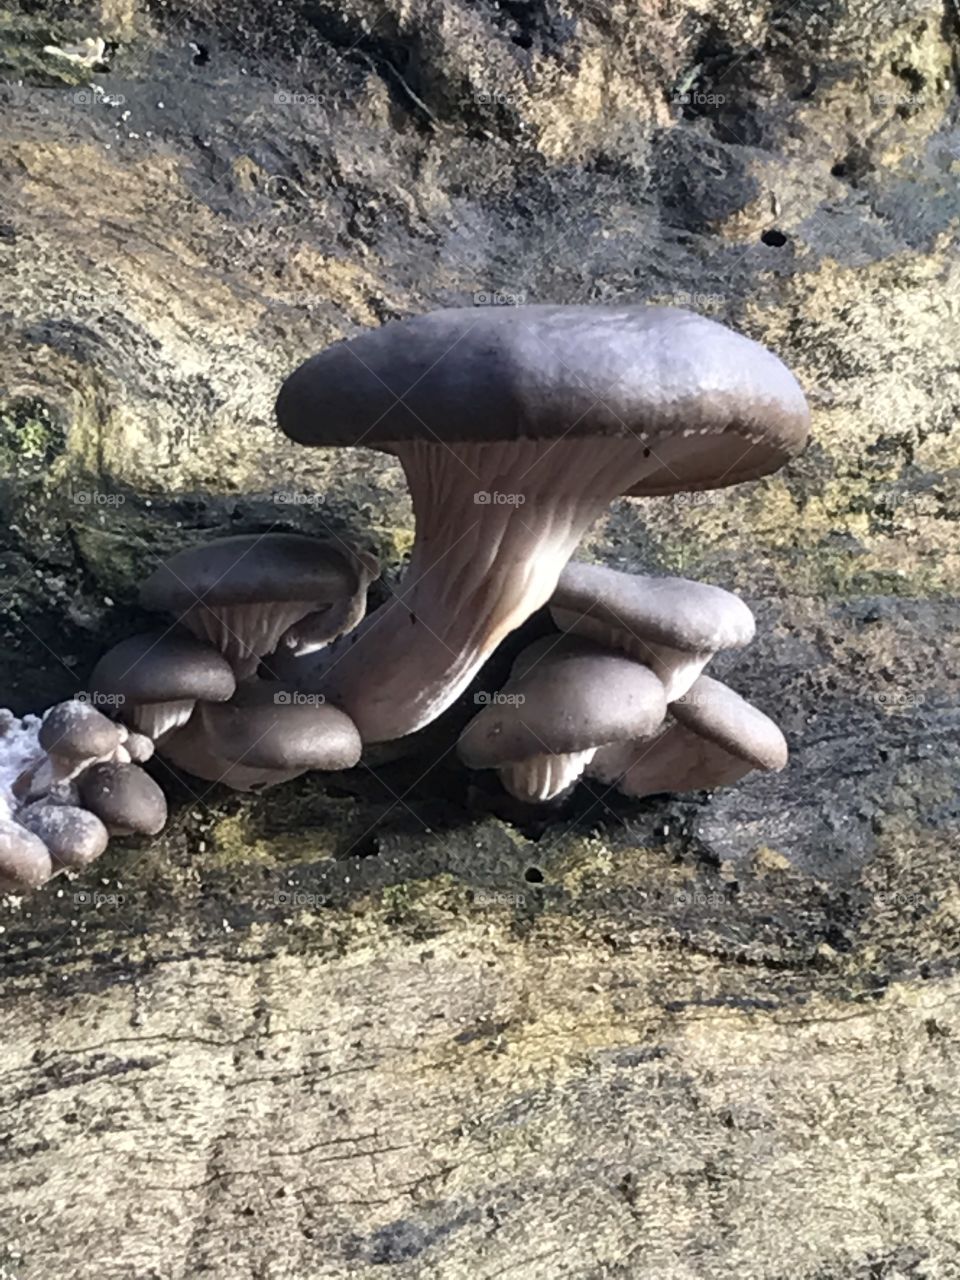 Fungi
